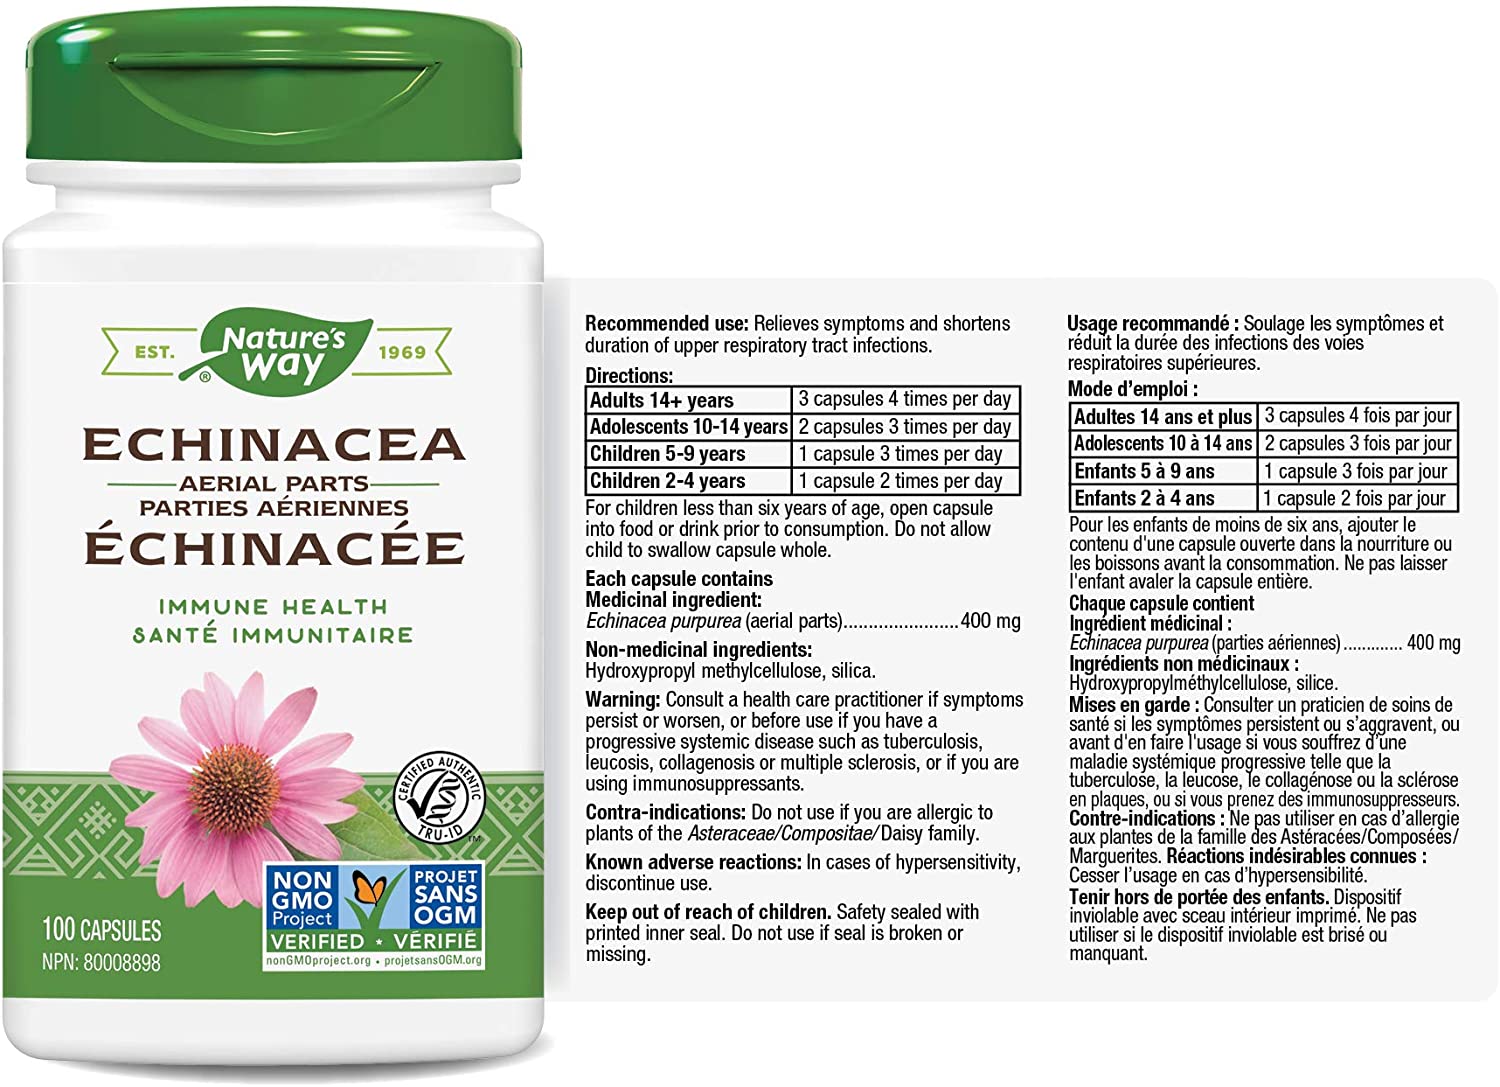 Echinacea Herb 100 Veg Caps